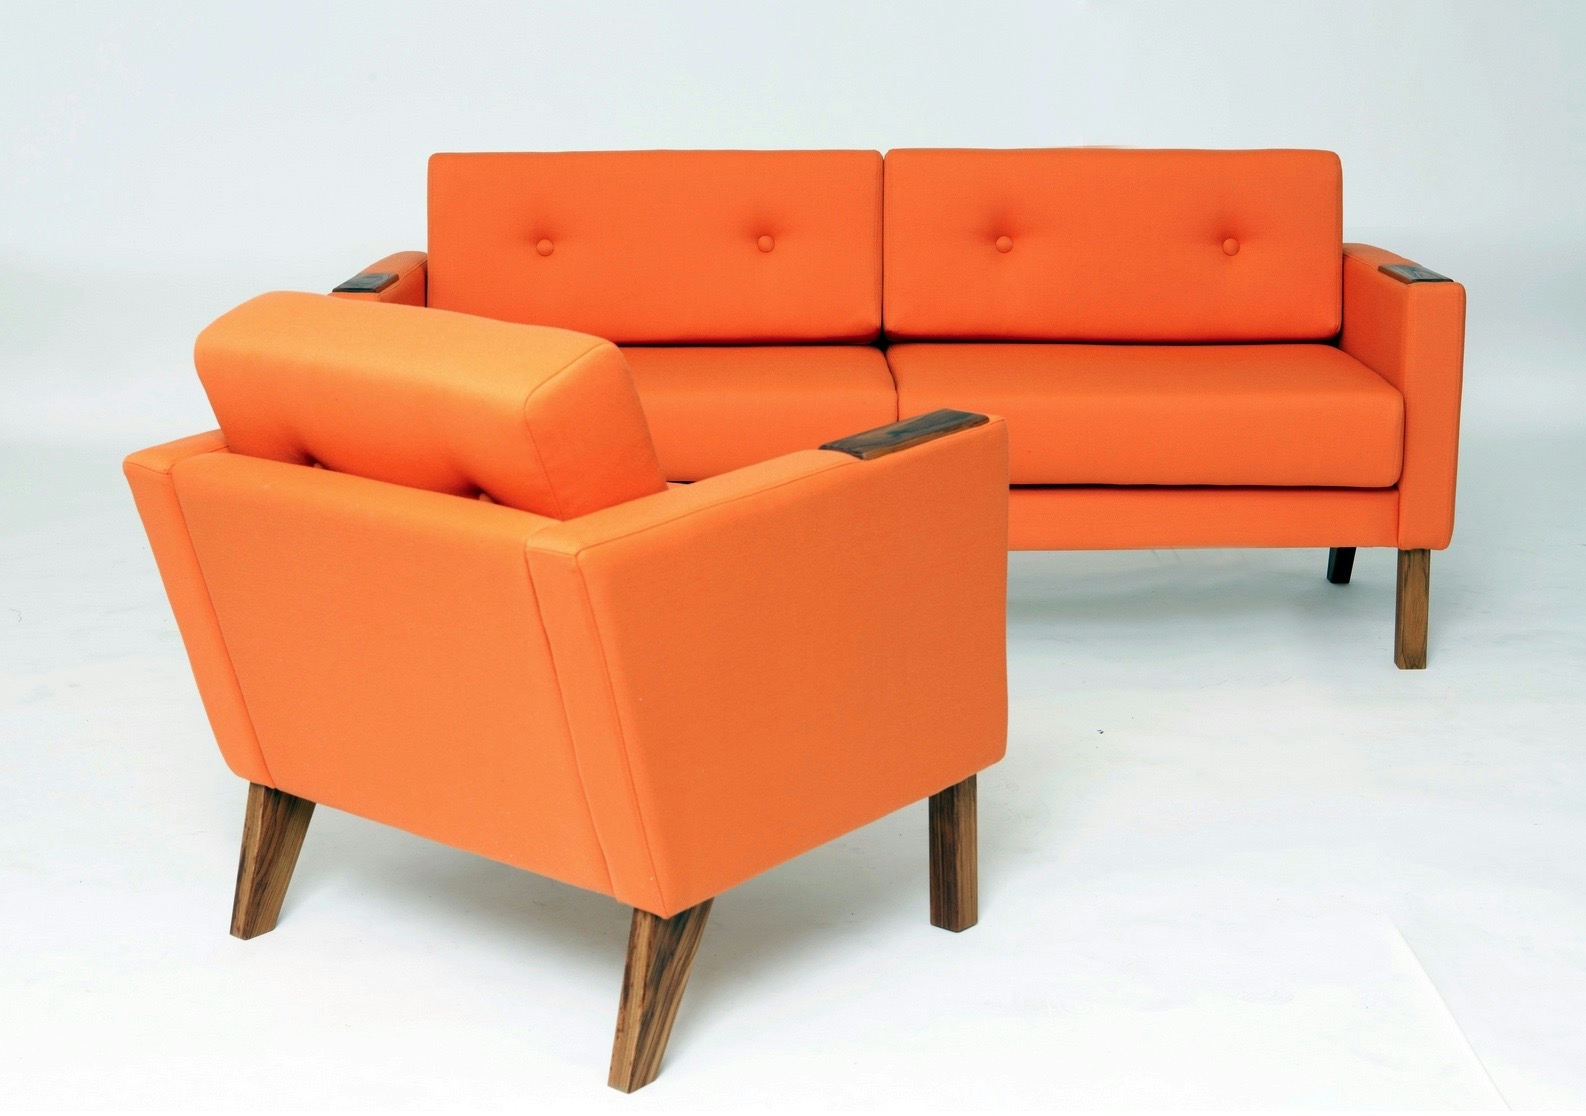 Kári sofa suite for Zenus Furniture - Premiered at DesignMarch 2013